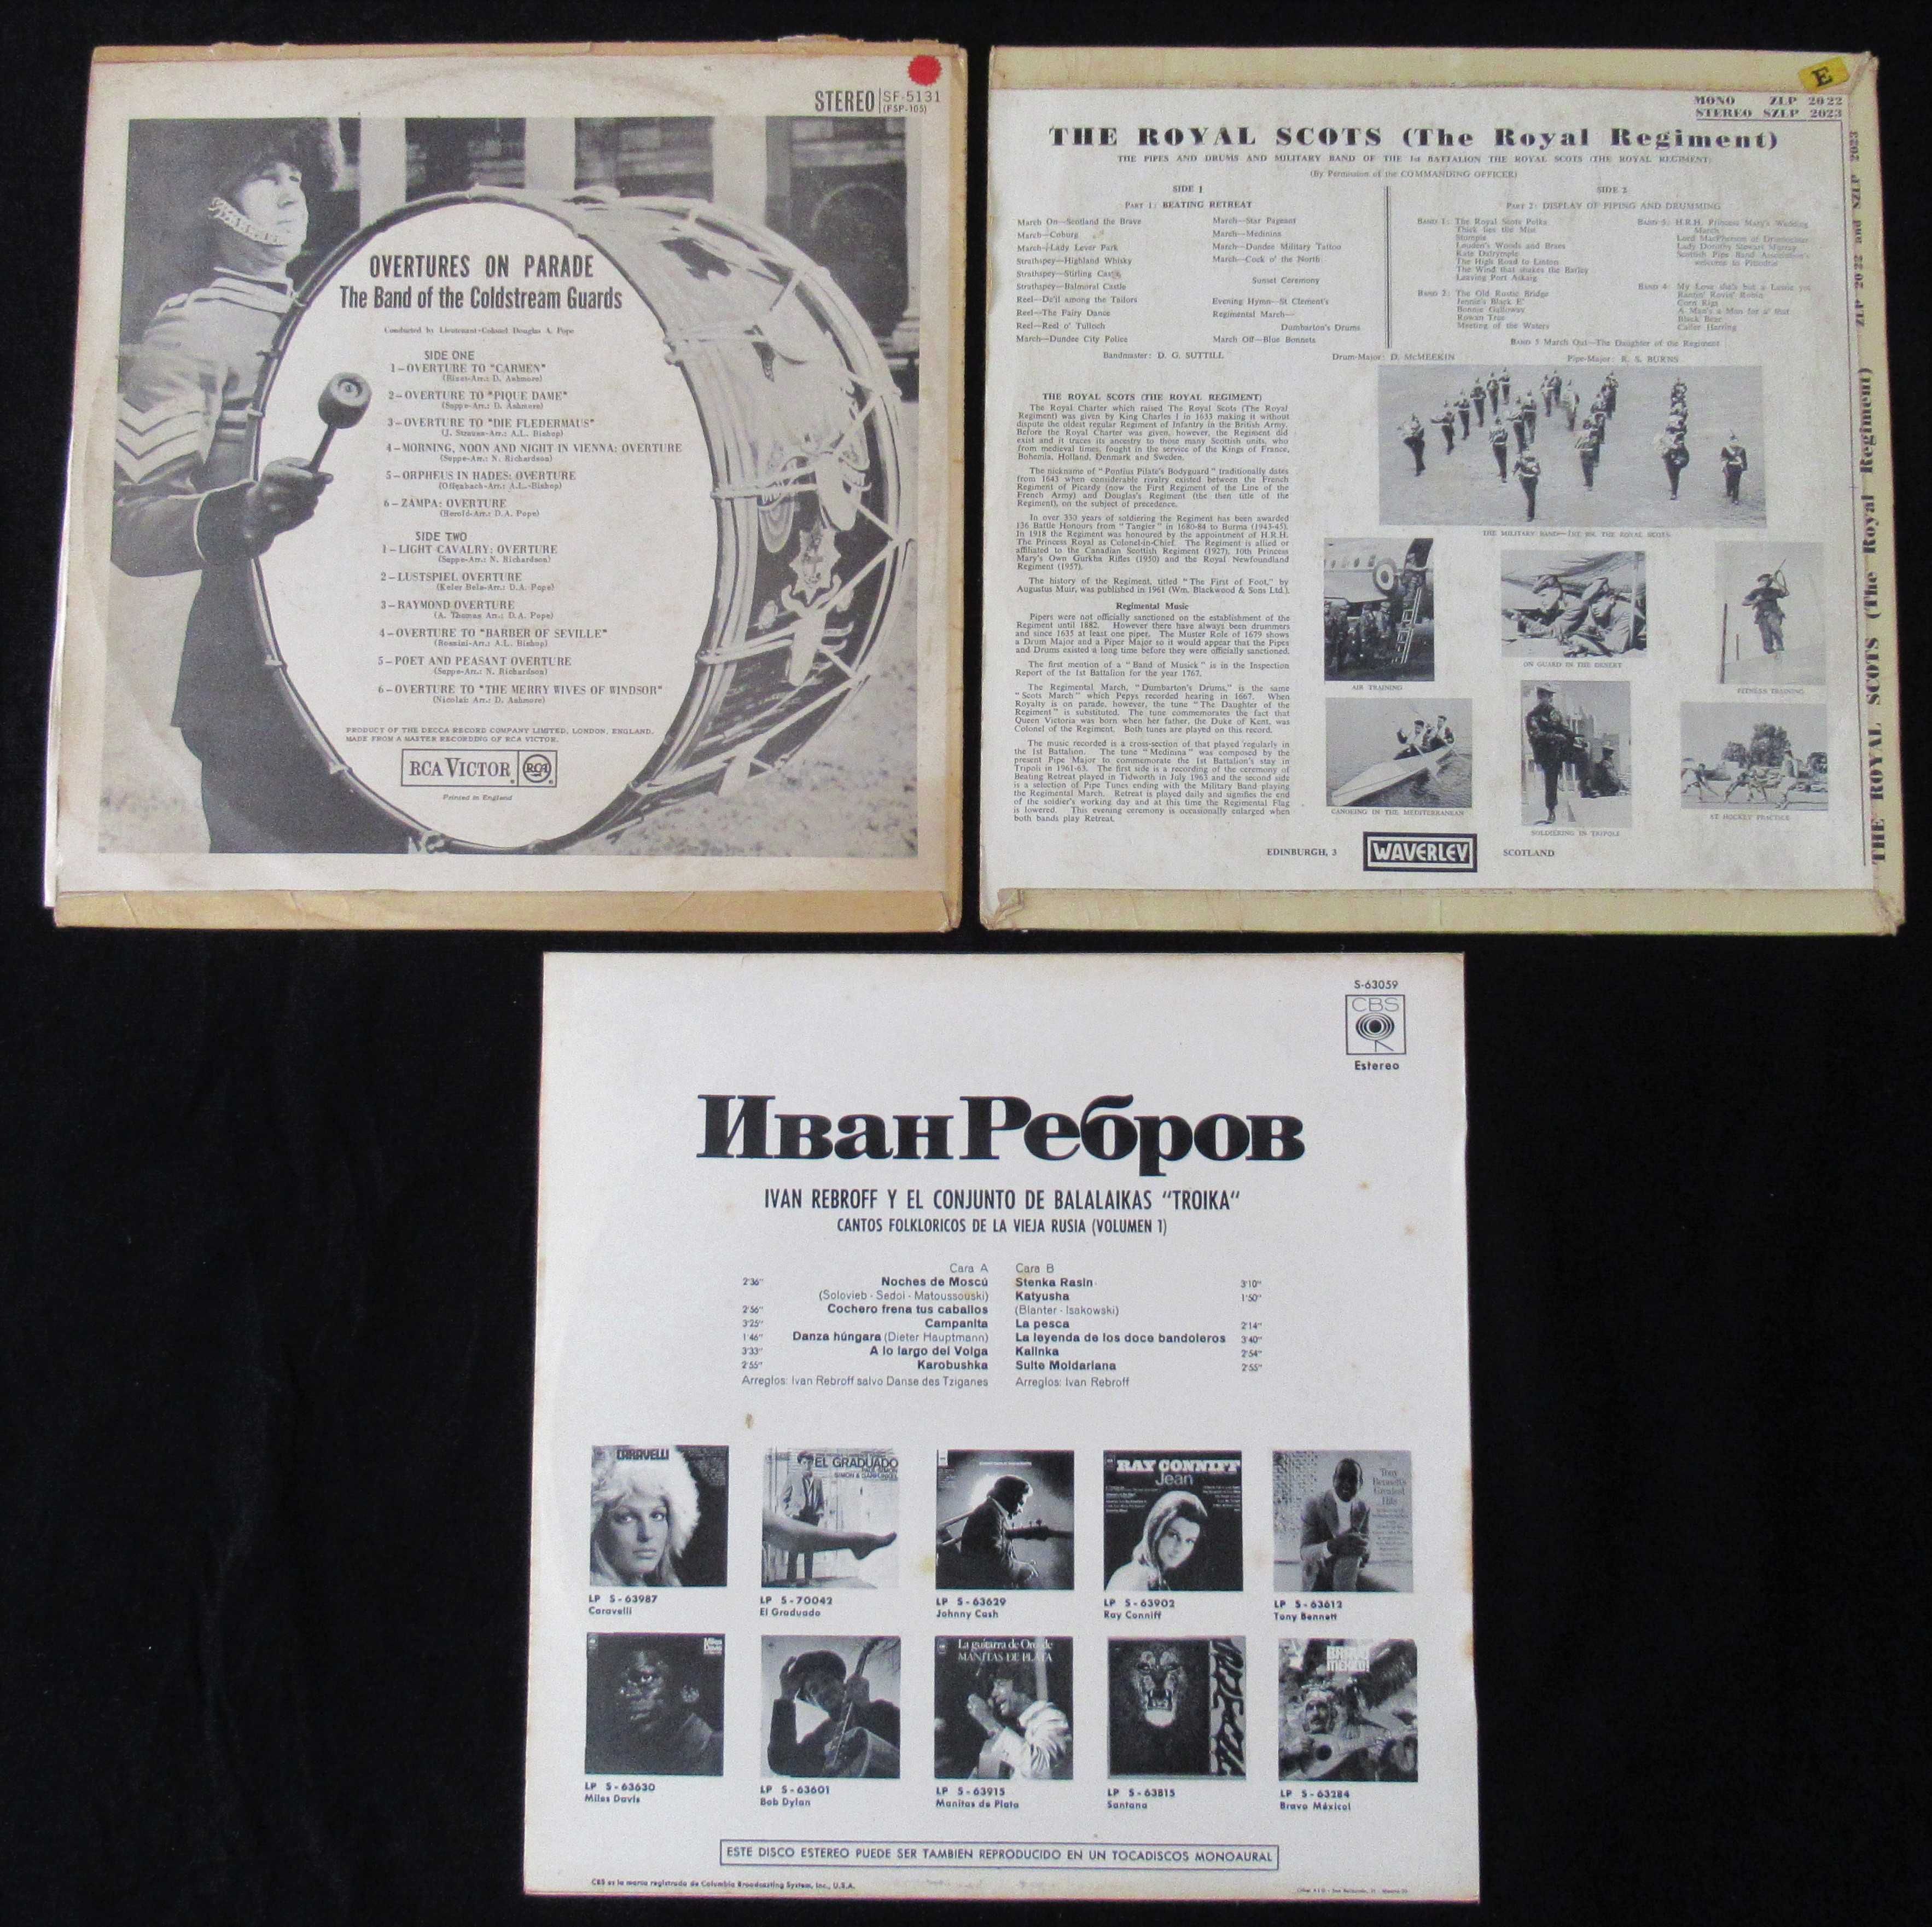 Discos Diversos - LP (Ref. 72)